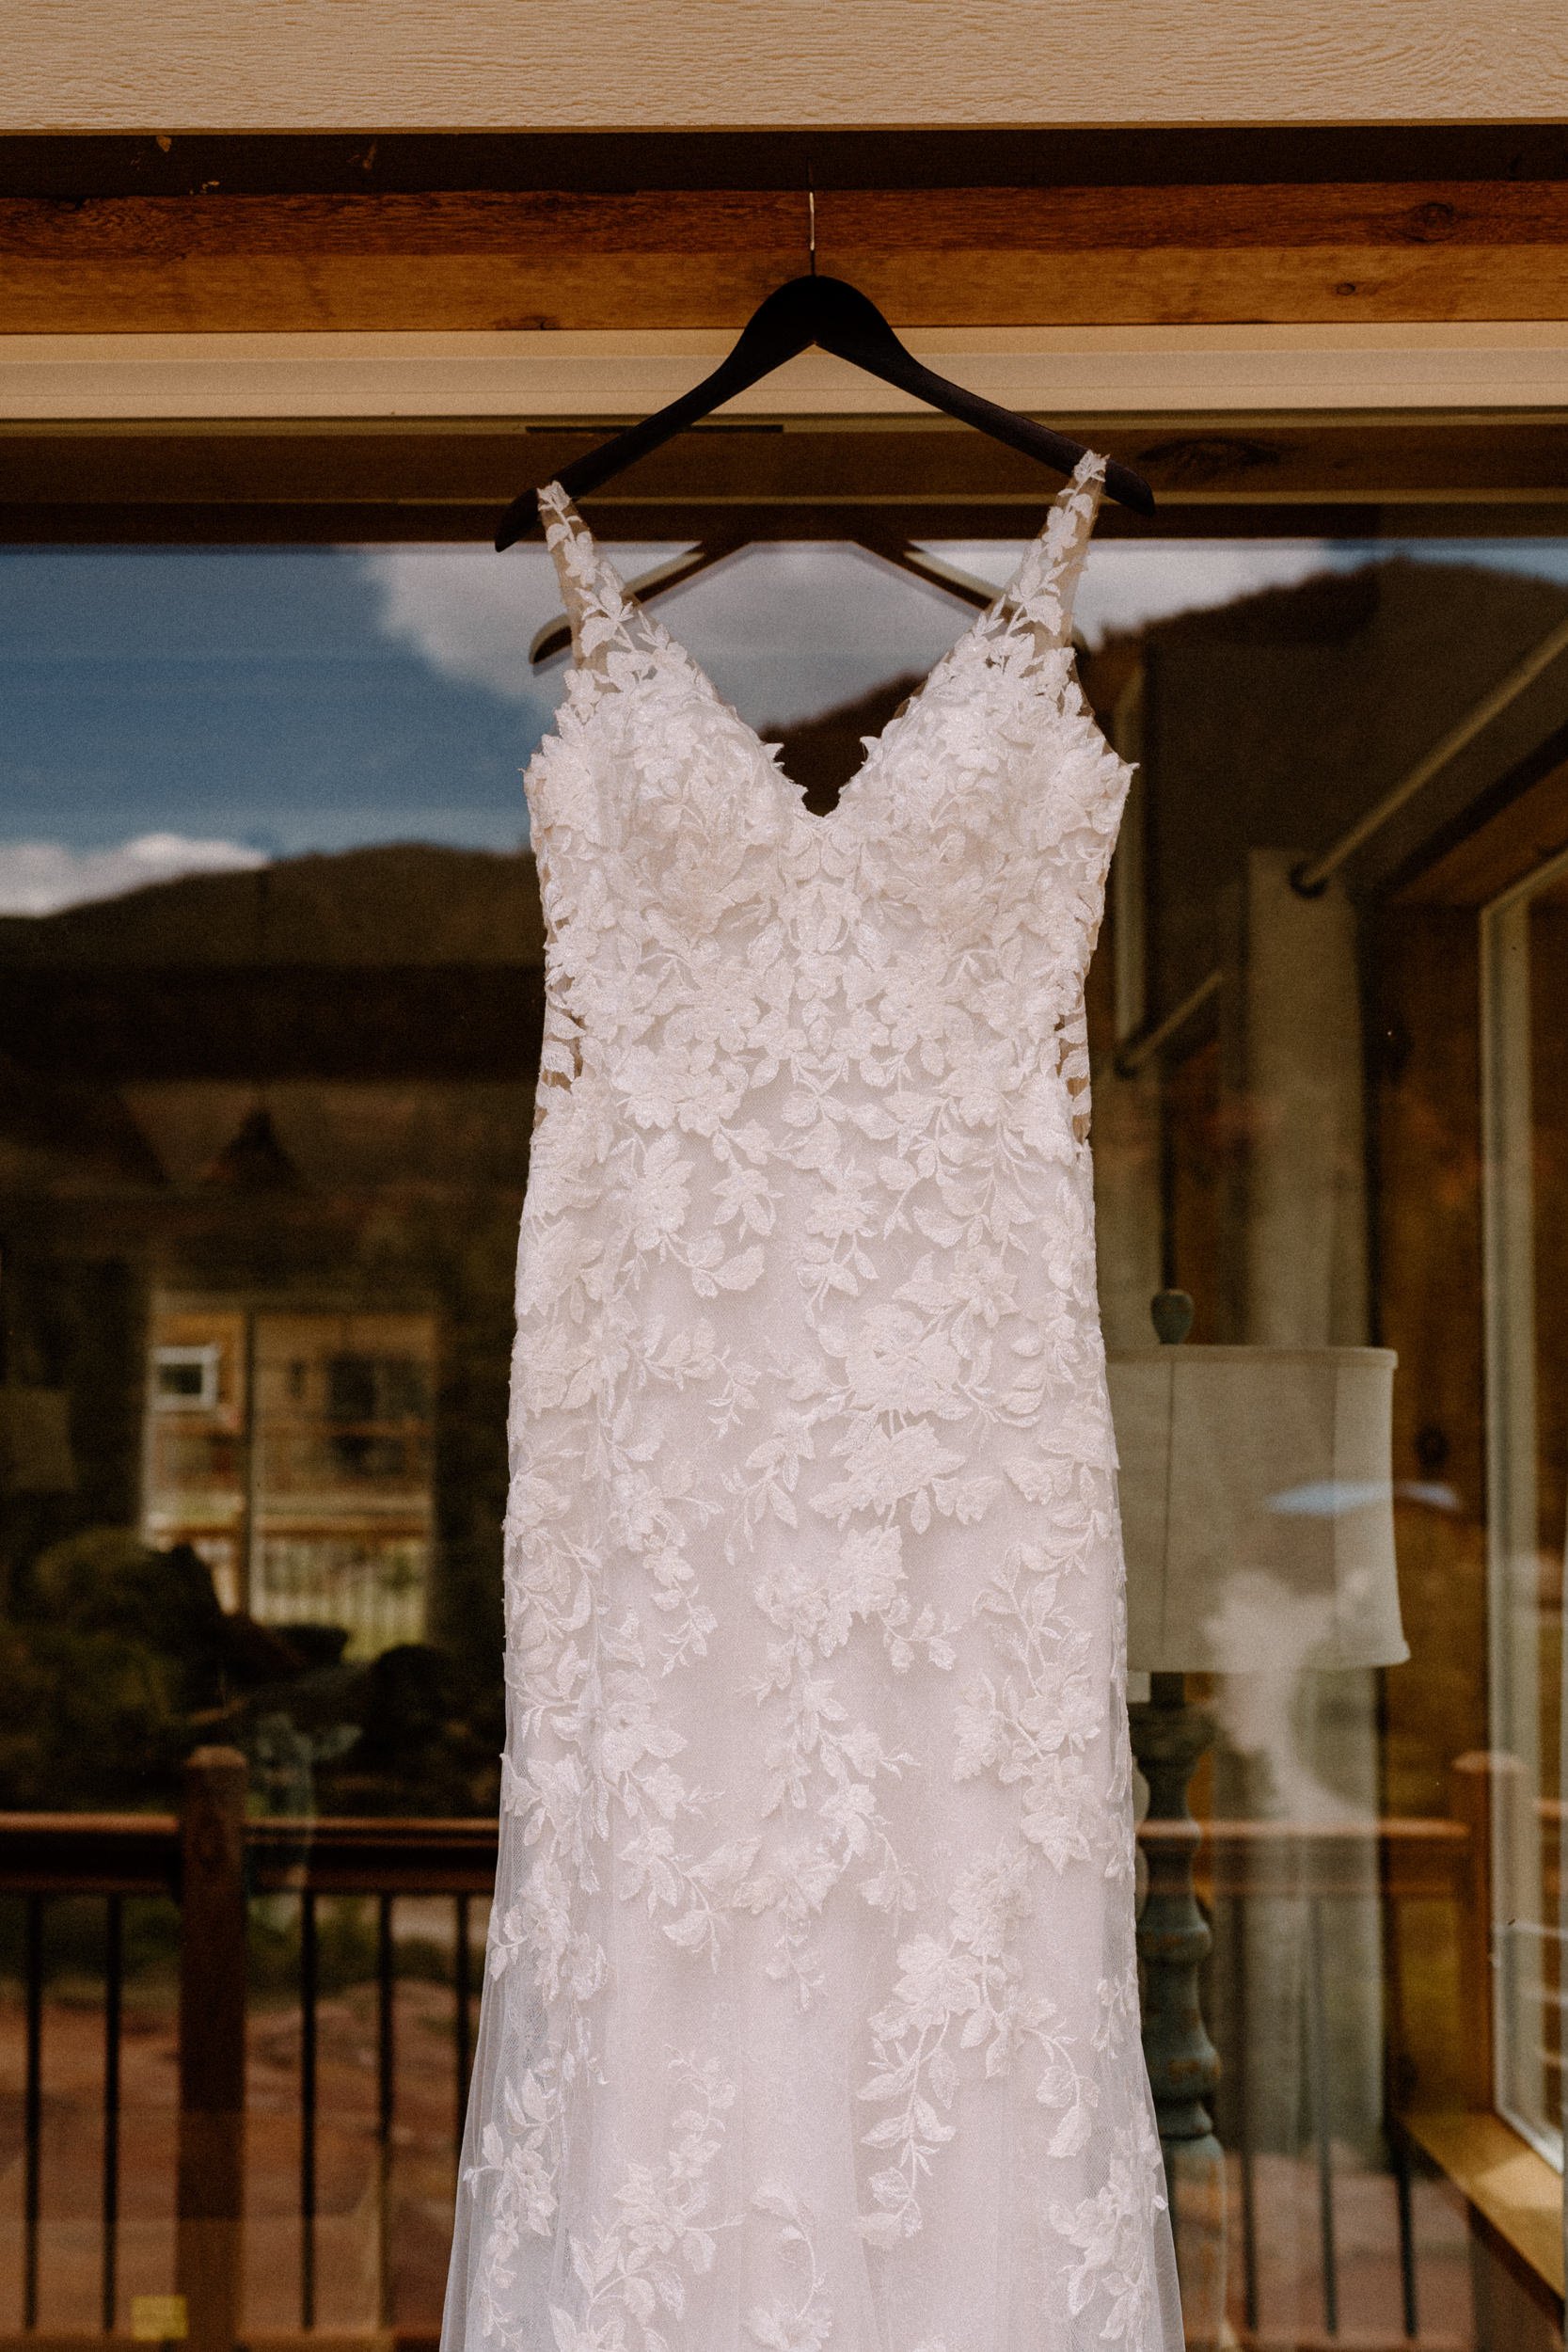 A white wedding dress hangs from the door